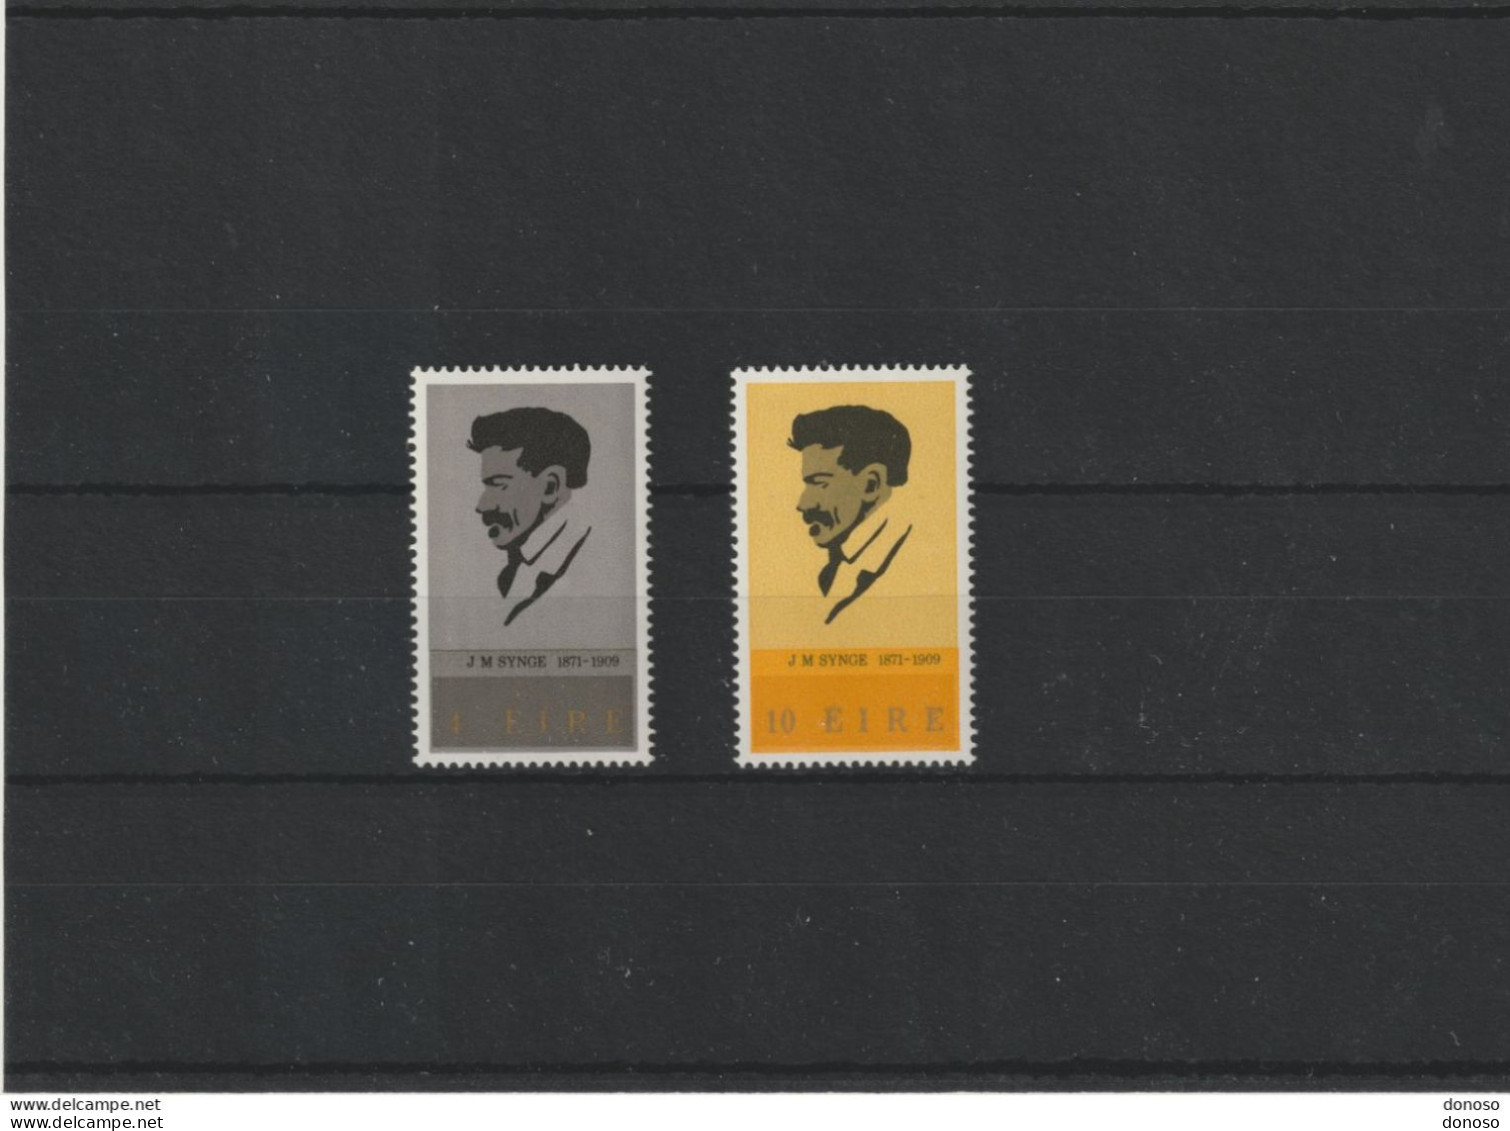 IRLANDE 1971 Synge, Dramaturge Yvert 269-270, Michel 267-268 NEUF** MNH - Unused Stamps